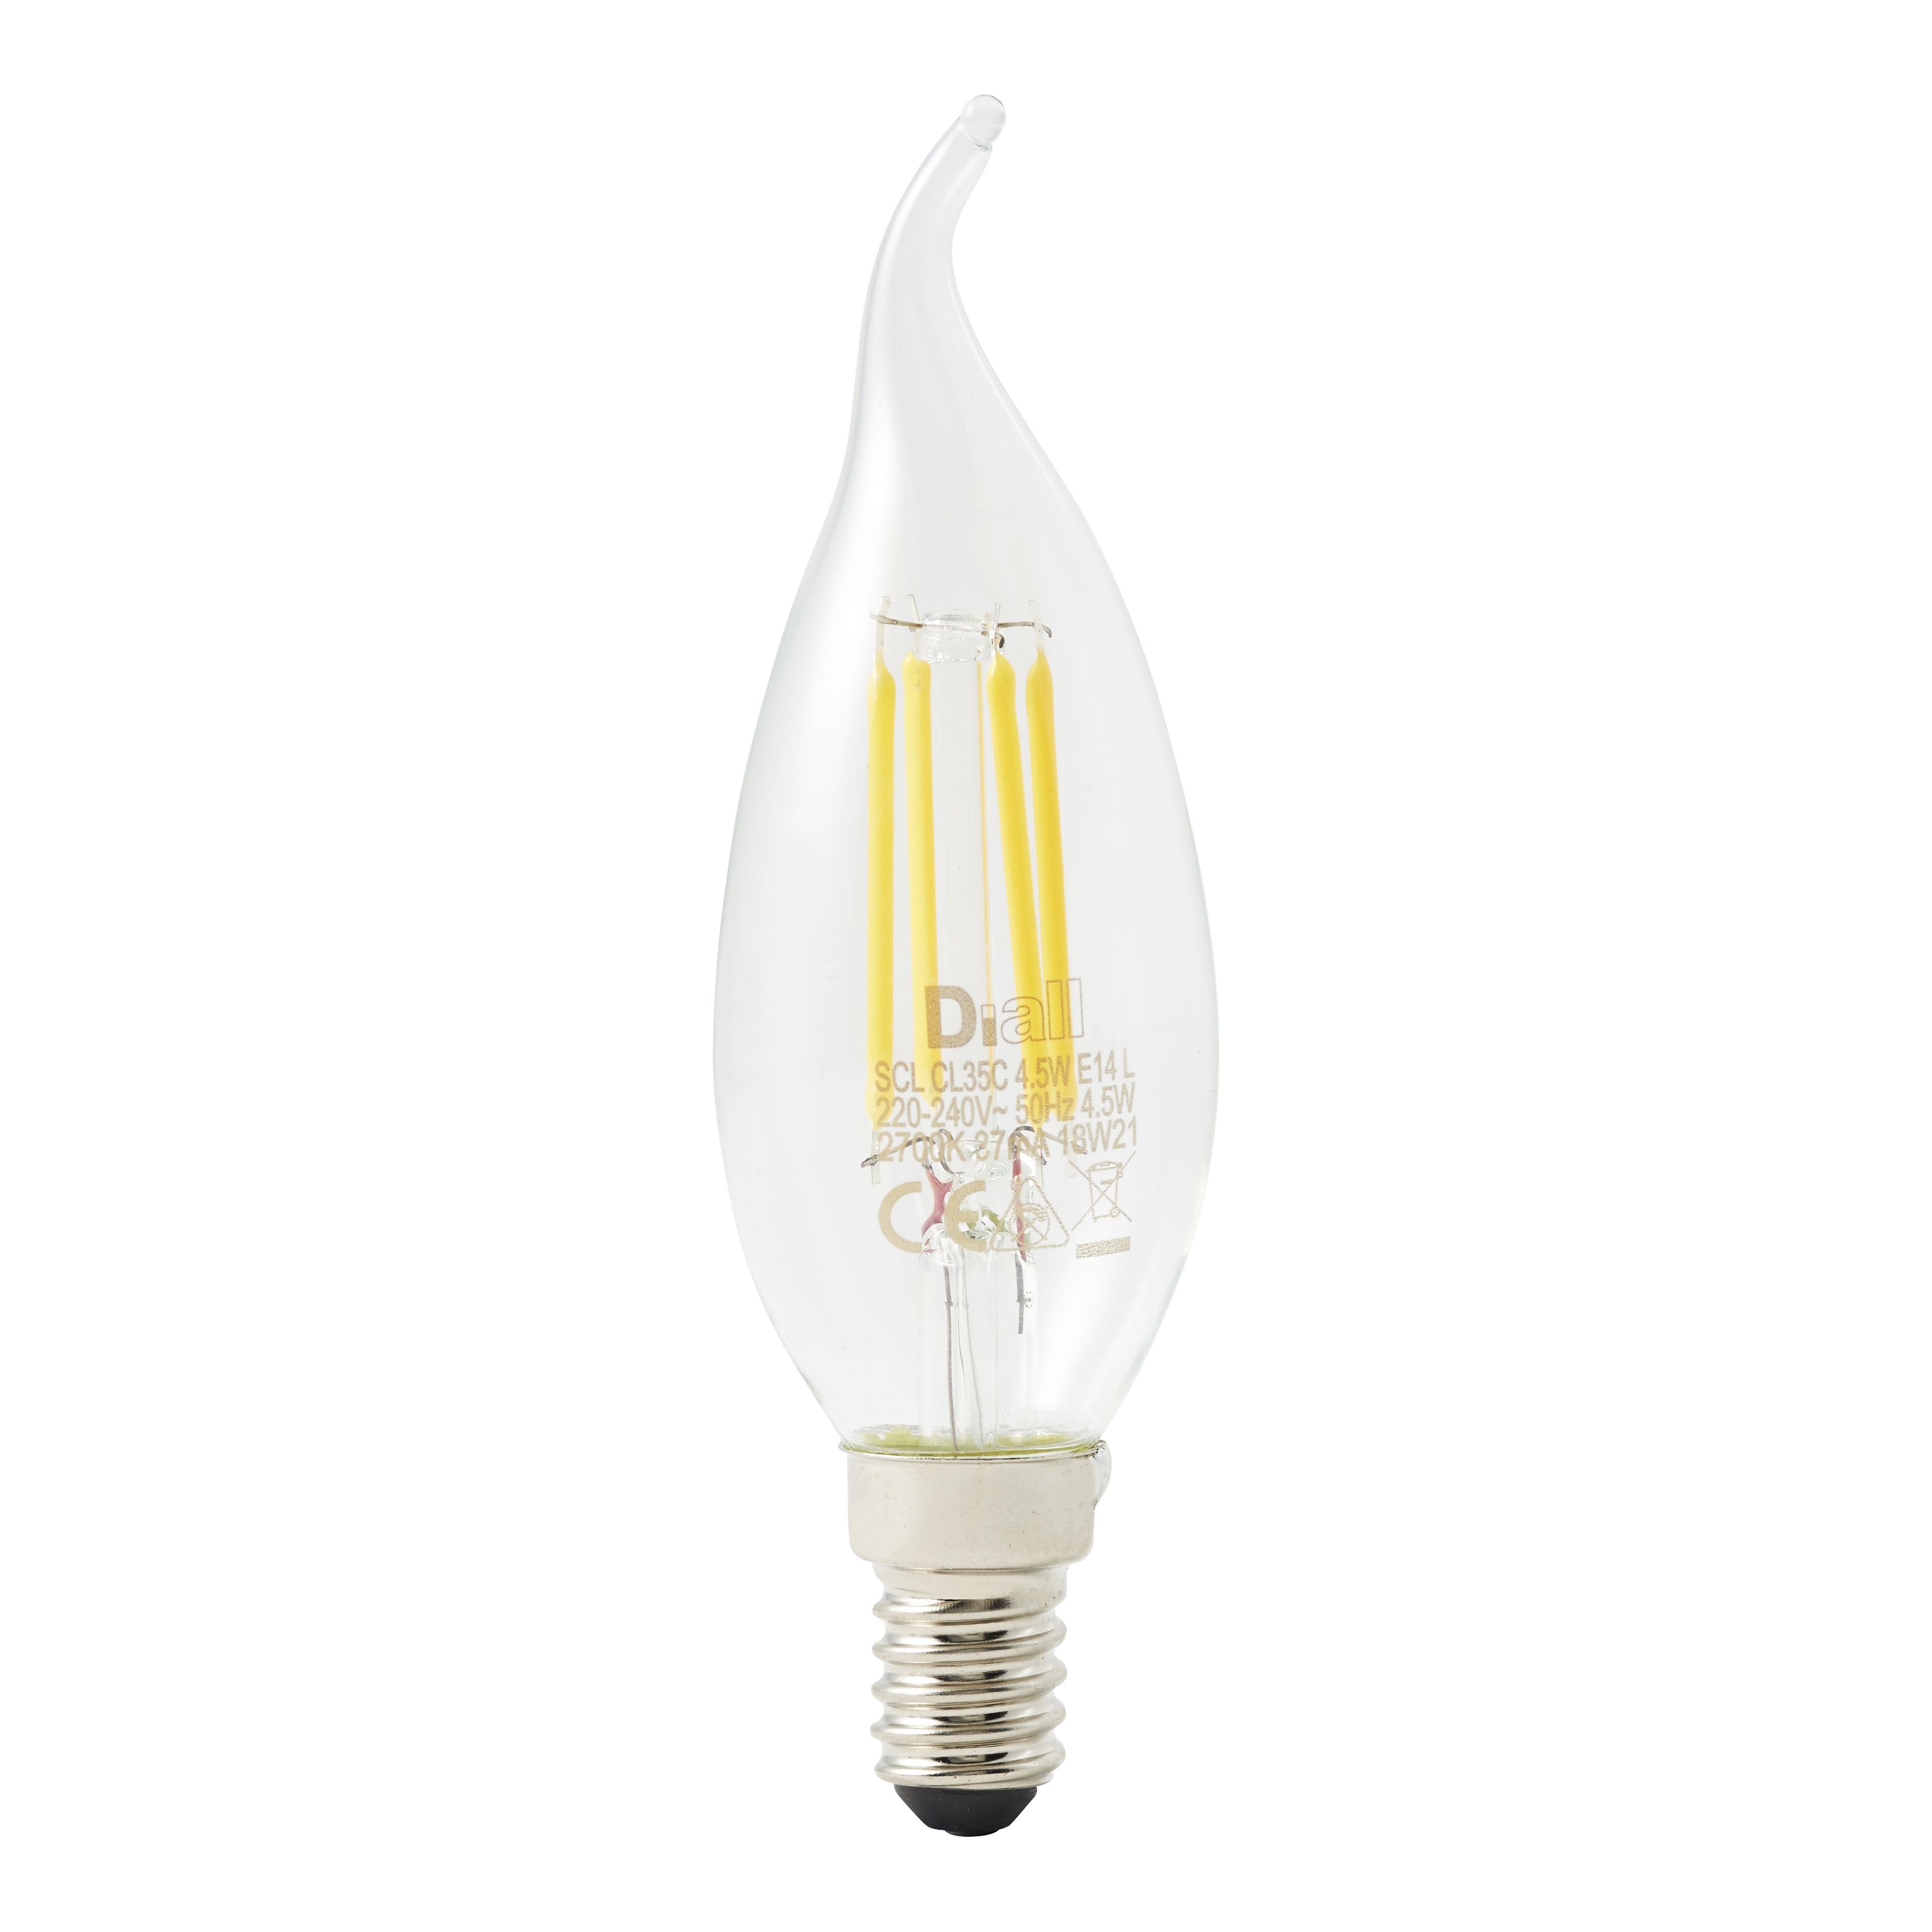 Diall B35 E14 3.4W 470lm white at | B&Q DIY Clear Light LED Candle Warm bulb filament